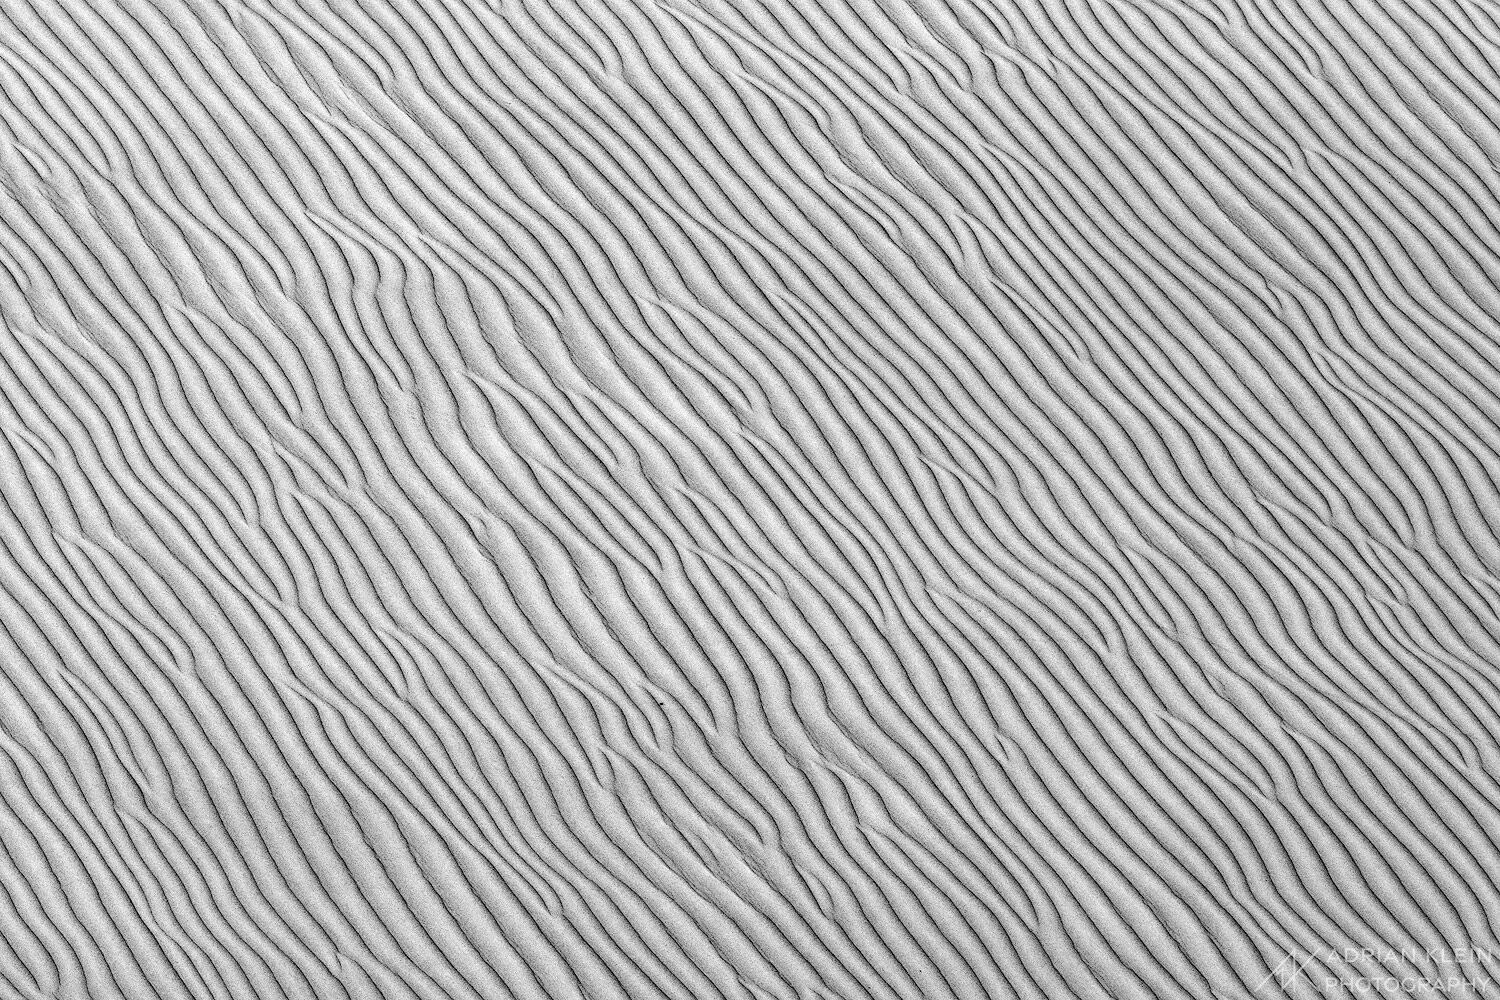 Endless wavy lines on sand dunes in Washington.